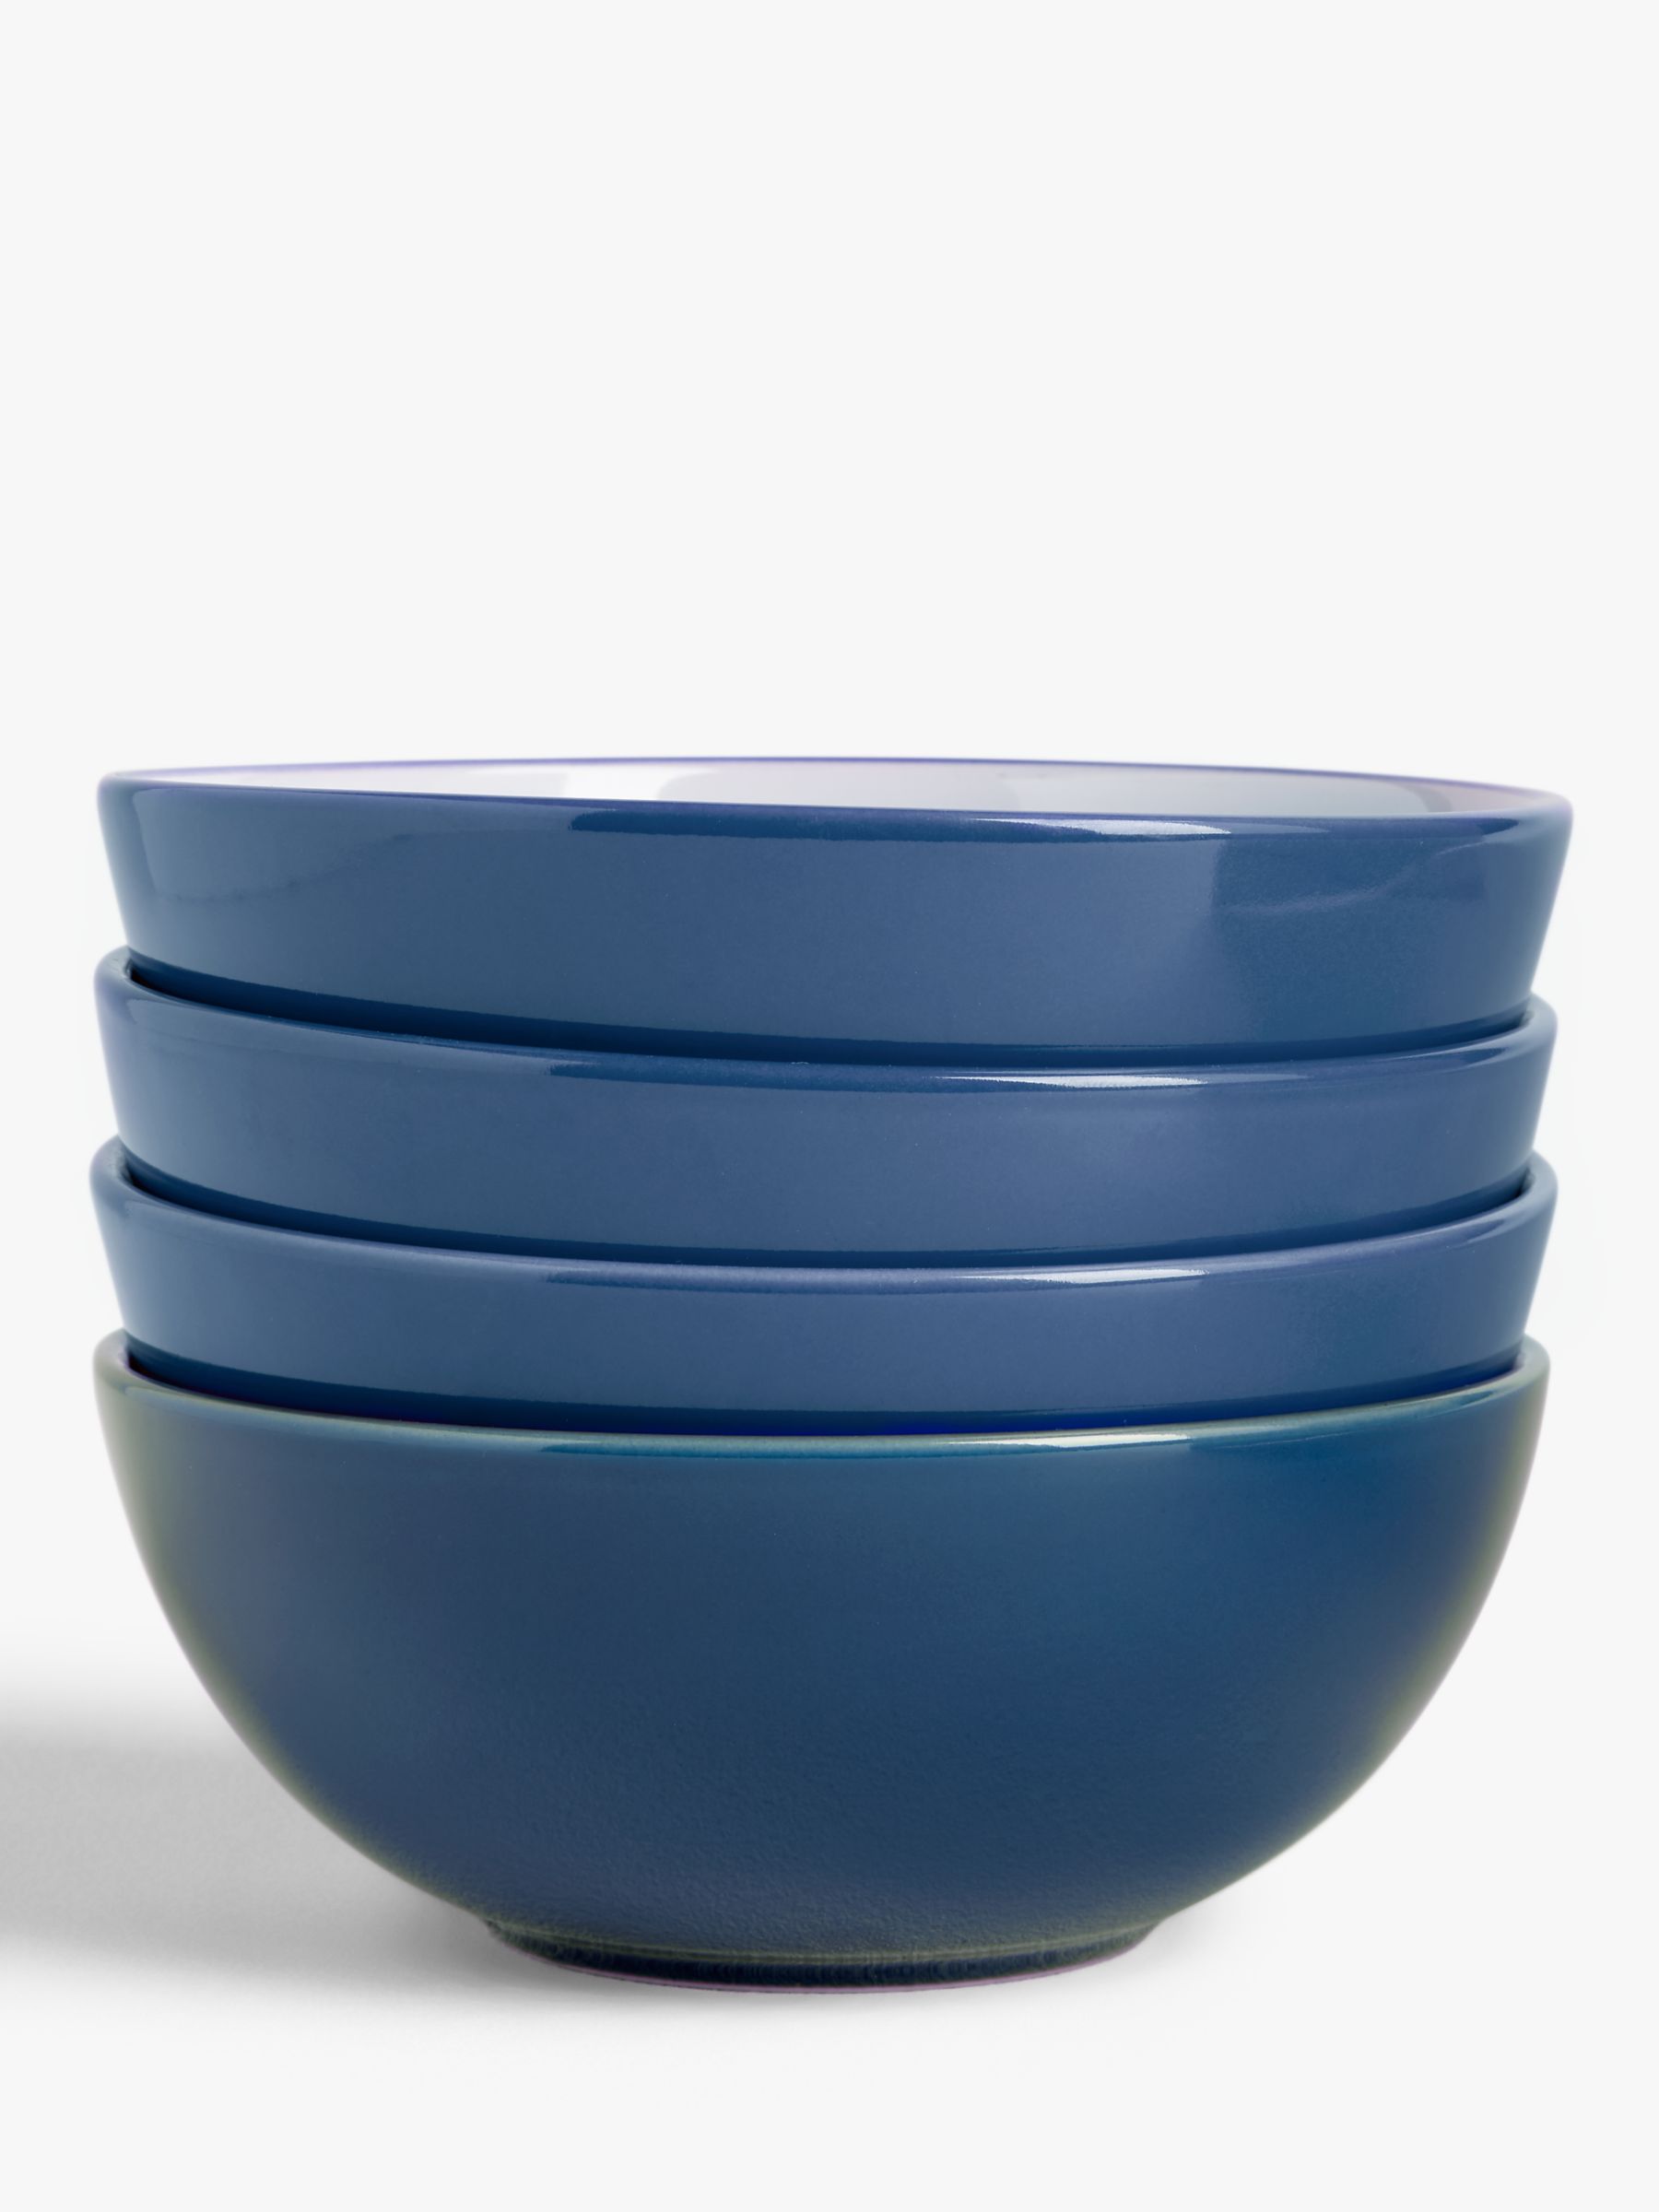 John Lewis ANYDAY Stoneware Cereal Bowls, Set of 4, 15.5cm, Blue